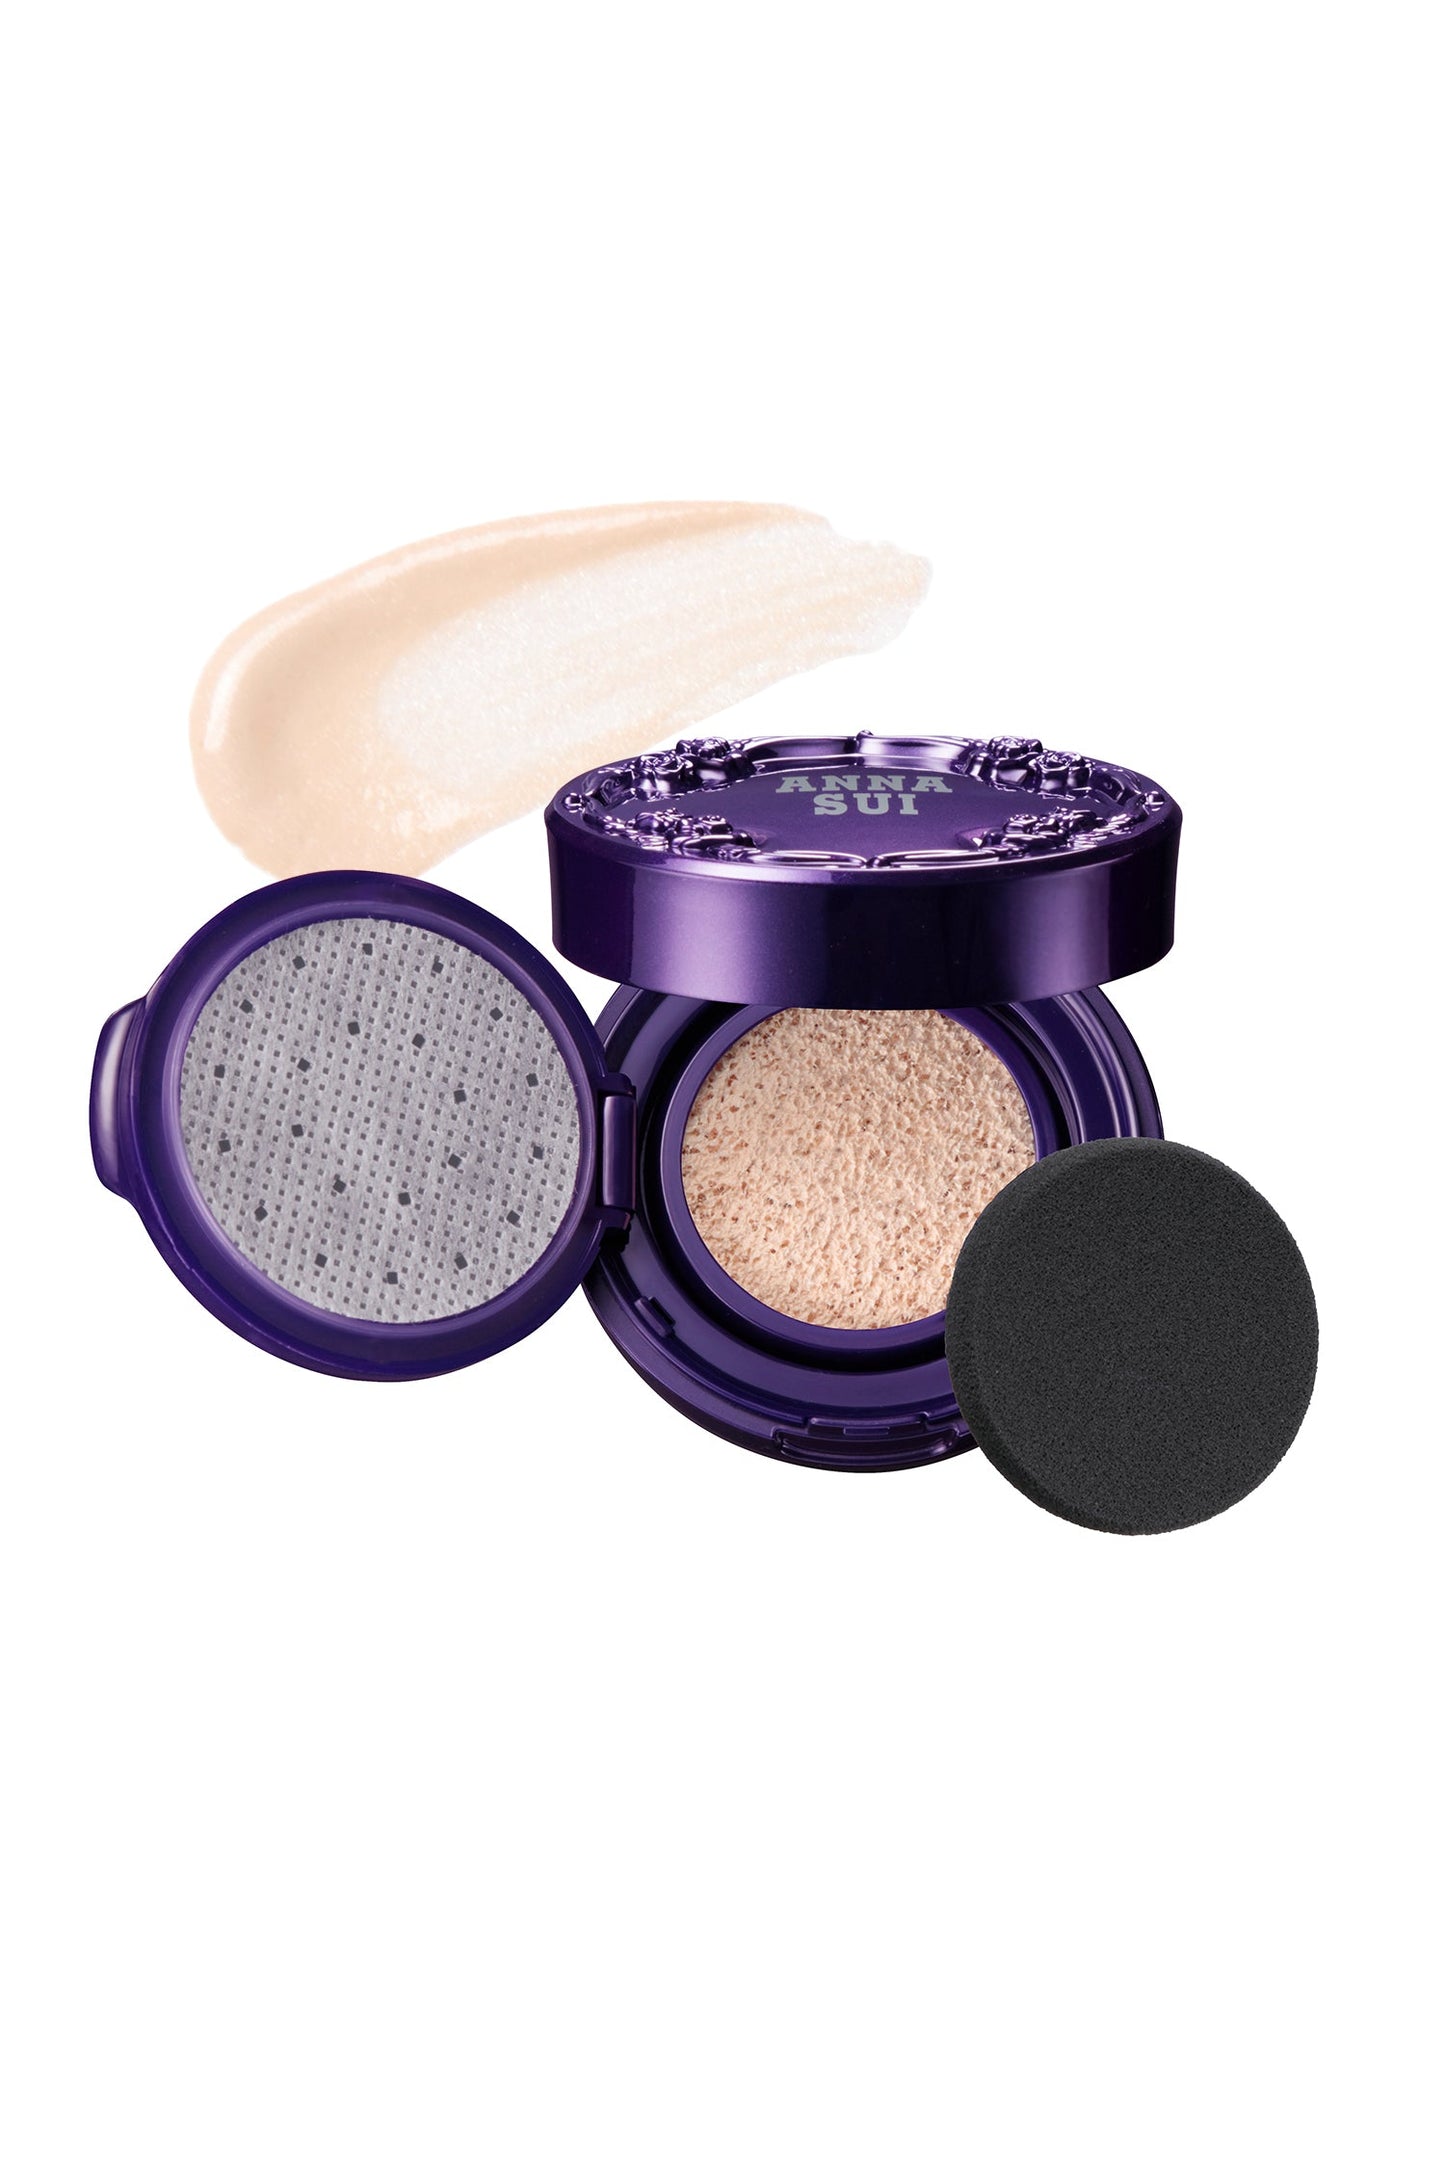 Purple round case raised rose pattern & label, liquid face powder & open lid, black cushion